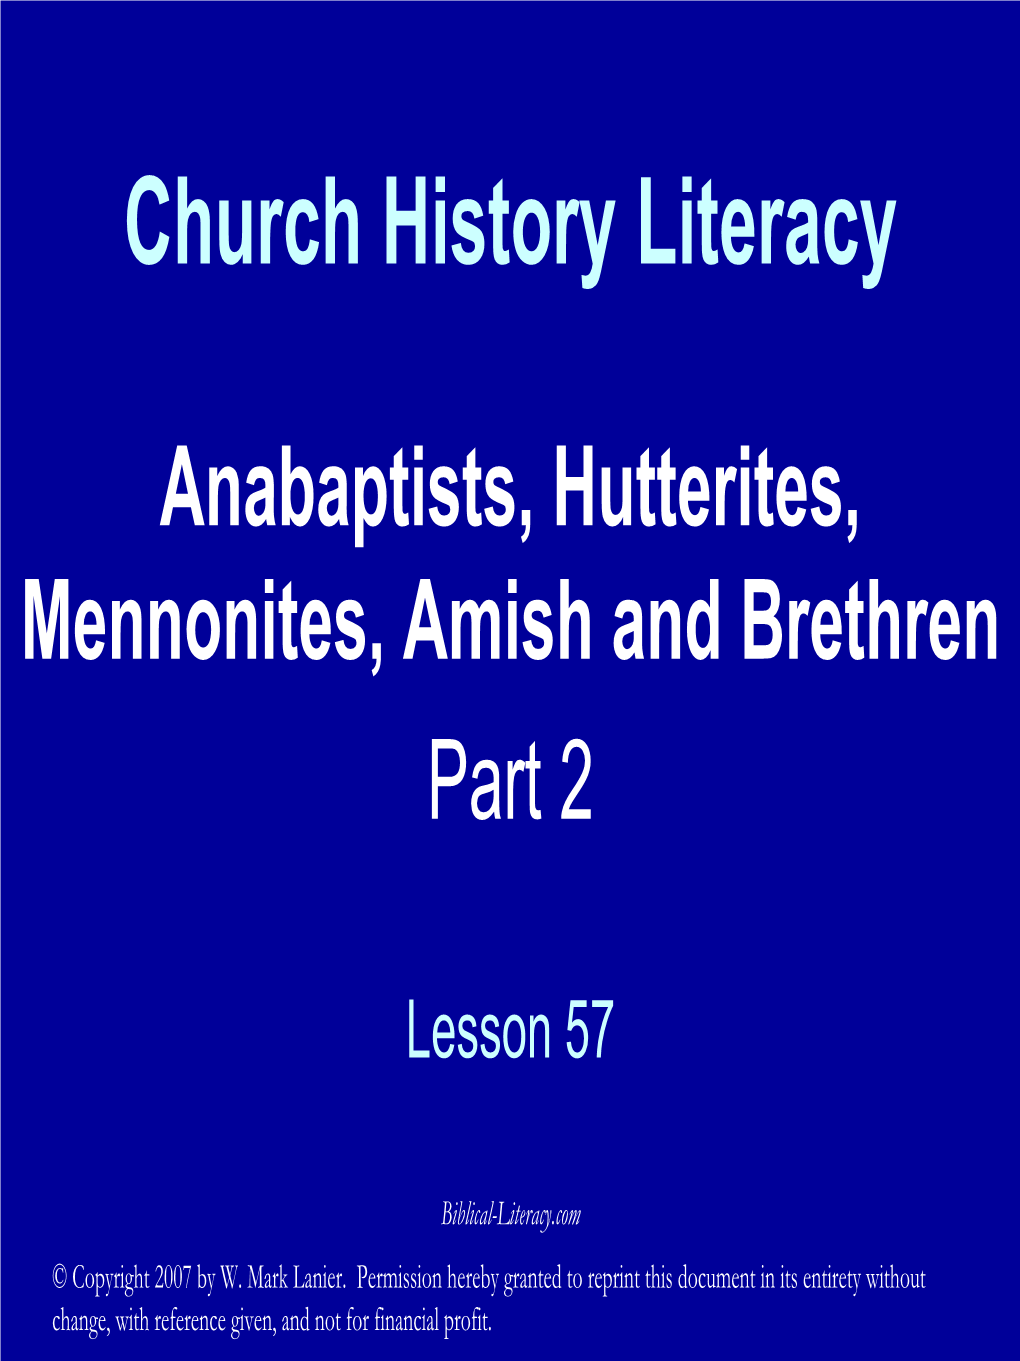 Anabaptists, Mennonites, Hutterites, Amish and Brethren